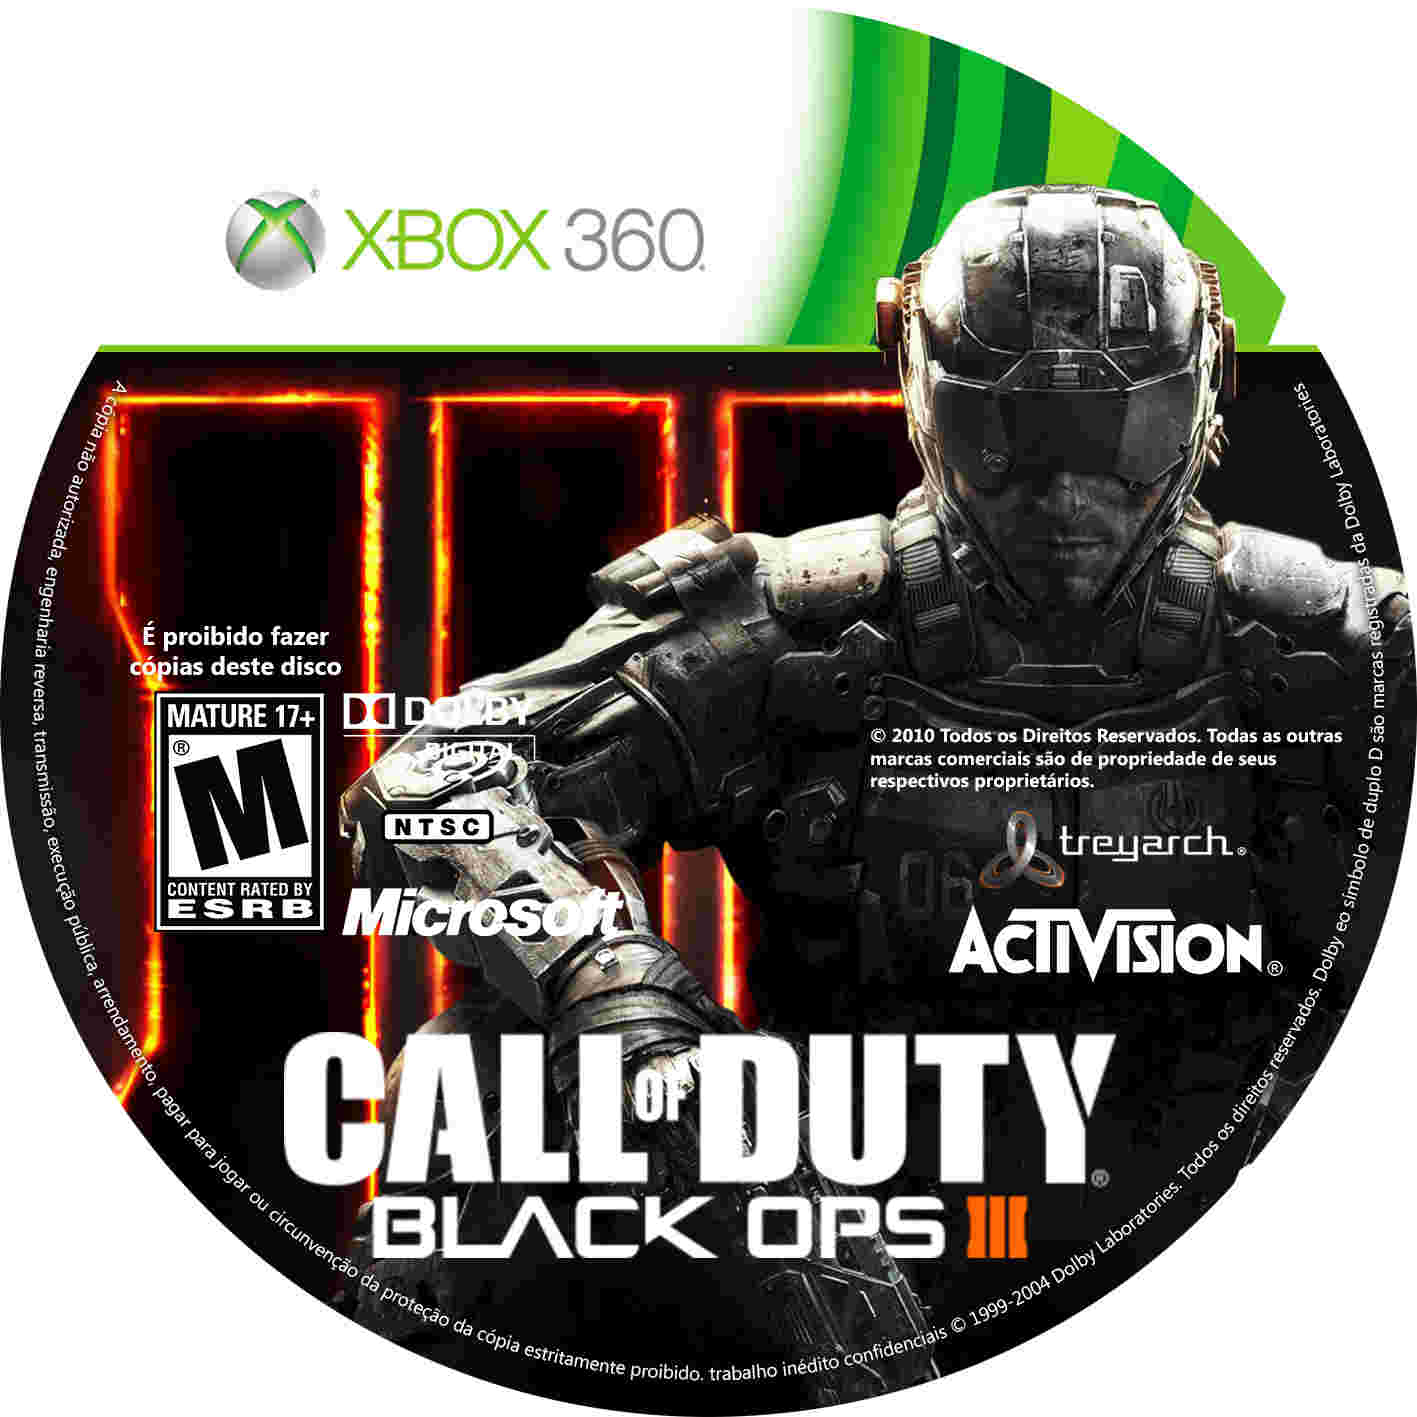 Диск игры call of duty. Call of Duty Black ops диск Xbox 360. Обложка диска Call of Duty 3 Xbox 360. Call of Duty диск на иксбокс 360. Call of Duty Black ops 3 диск Xbox 360.